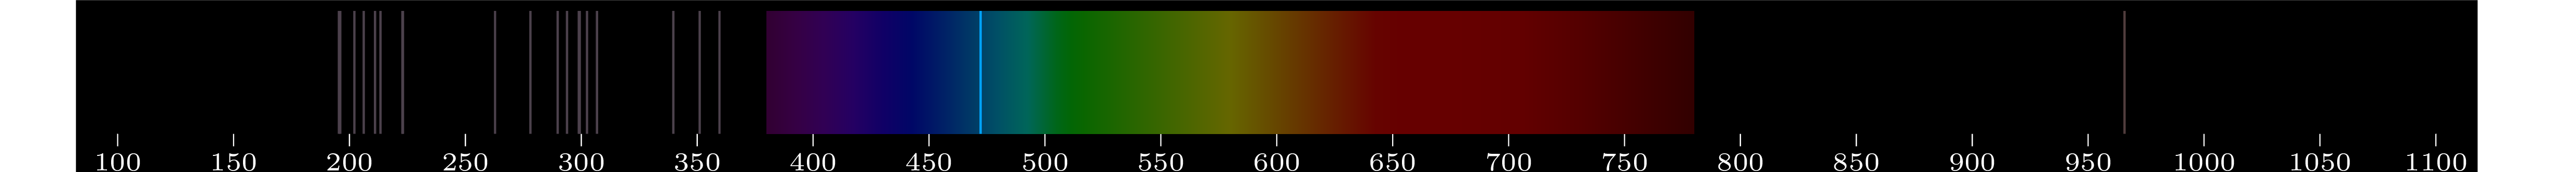 emmision spectra of element Bi